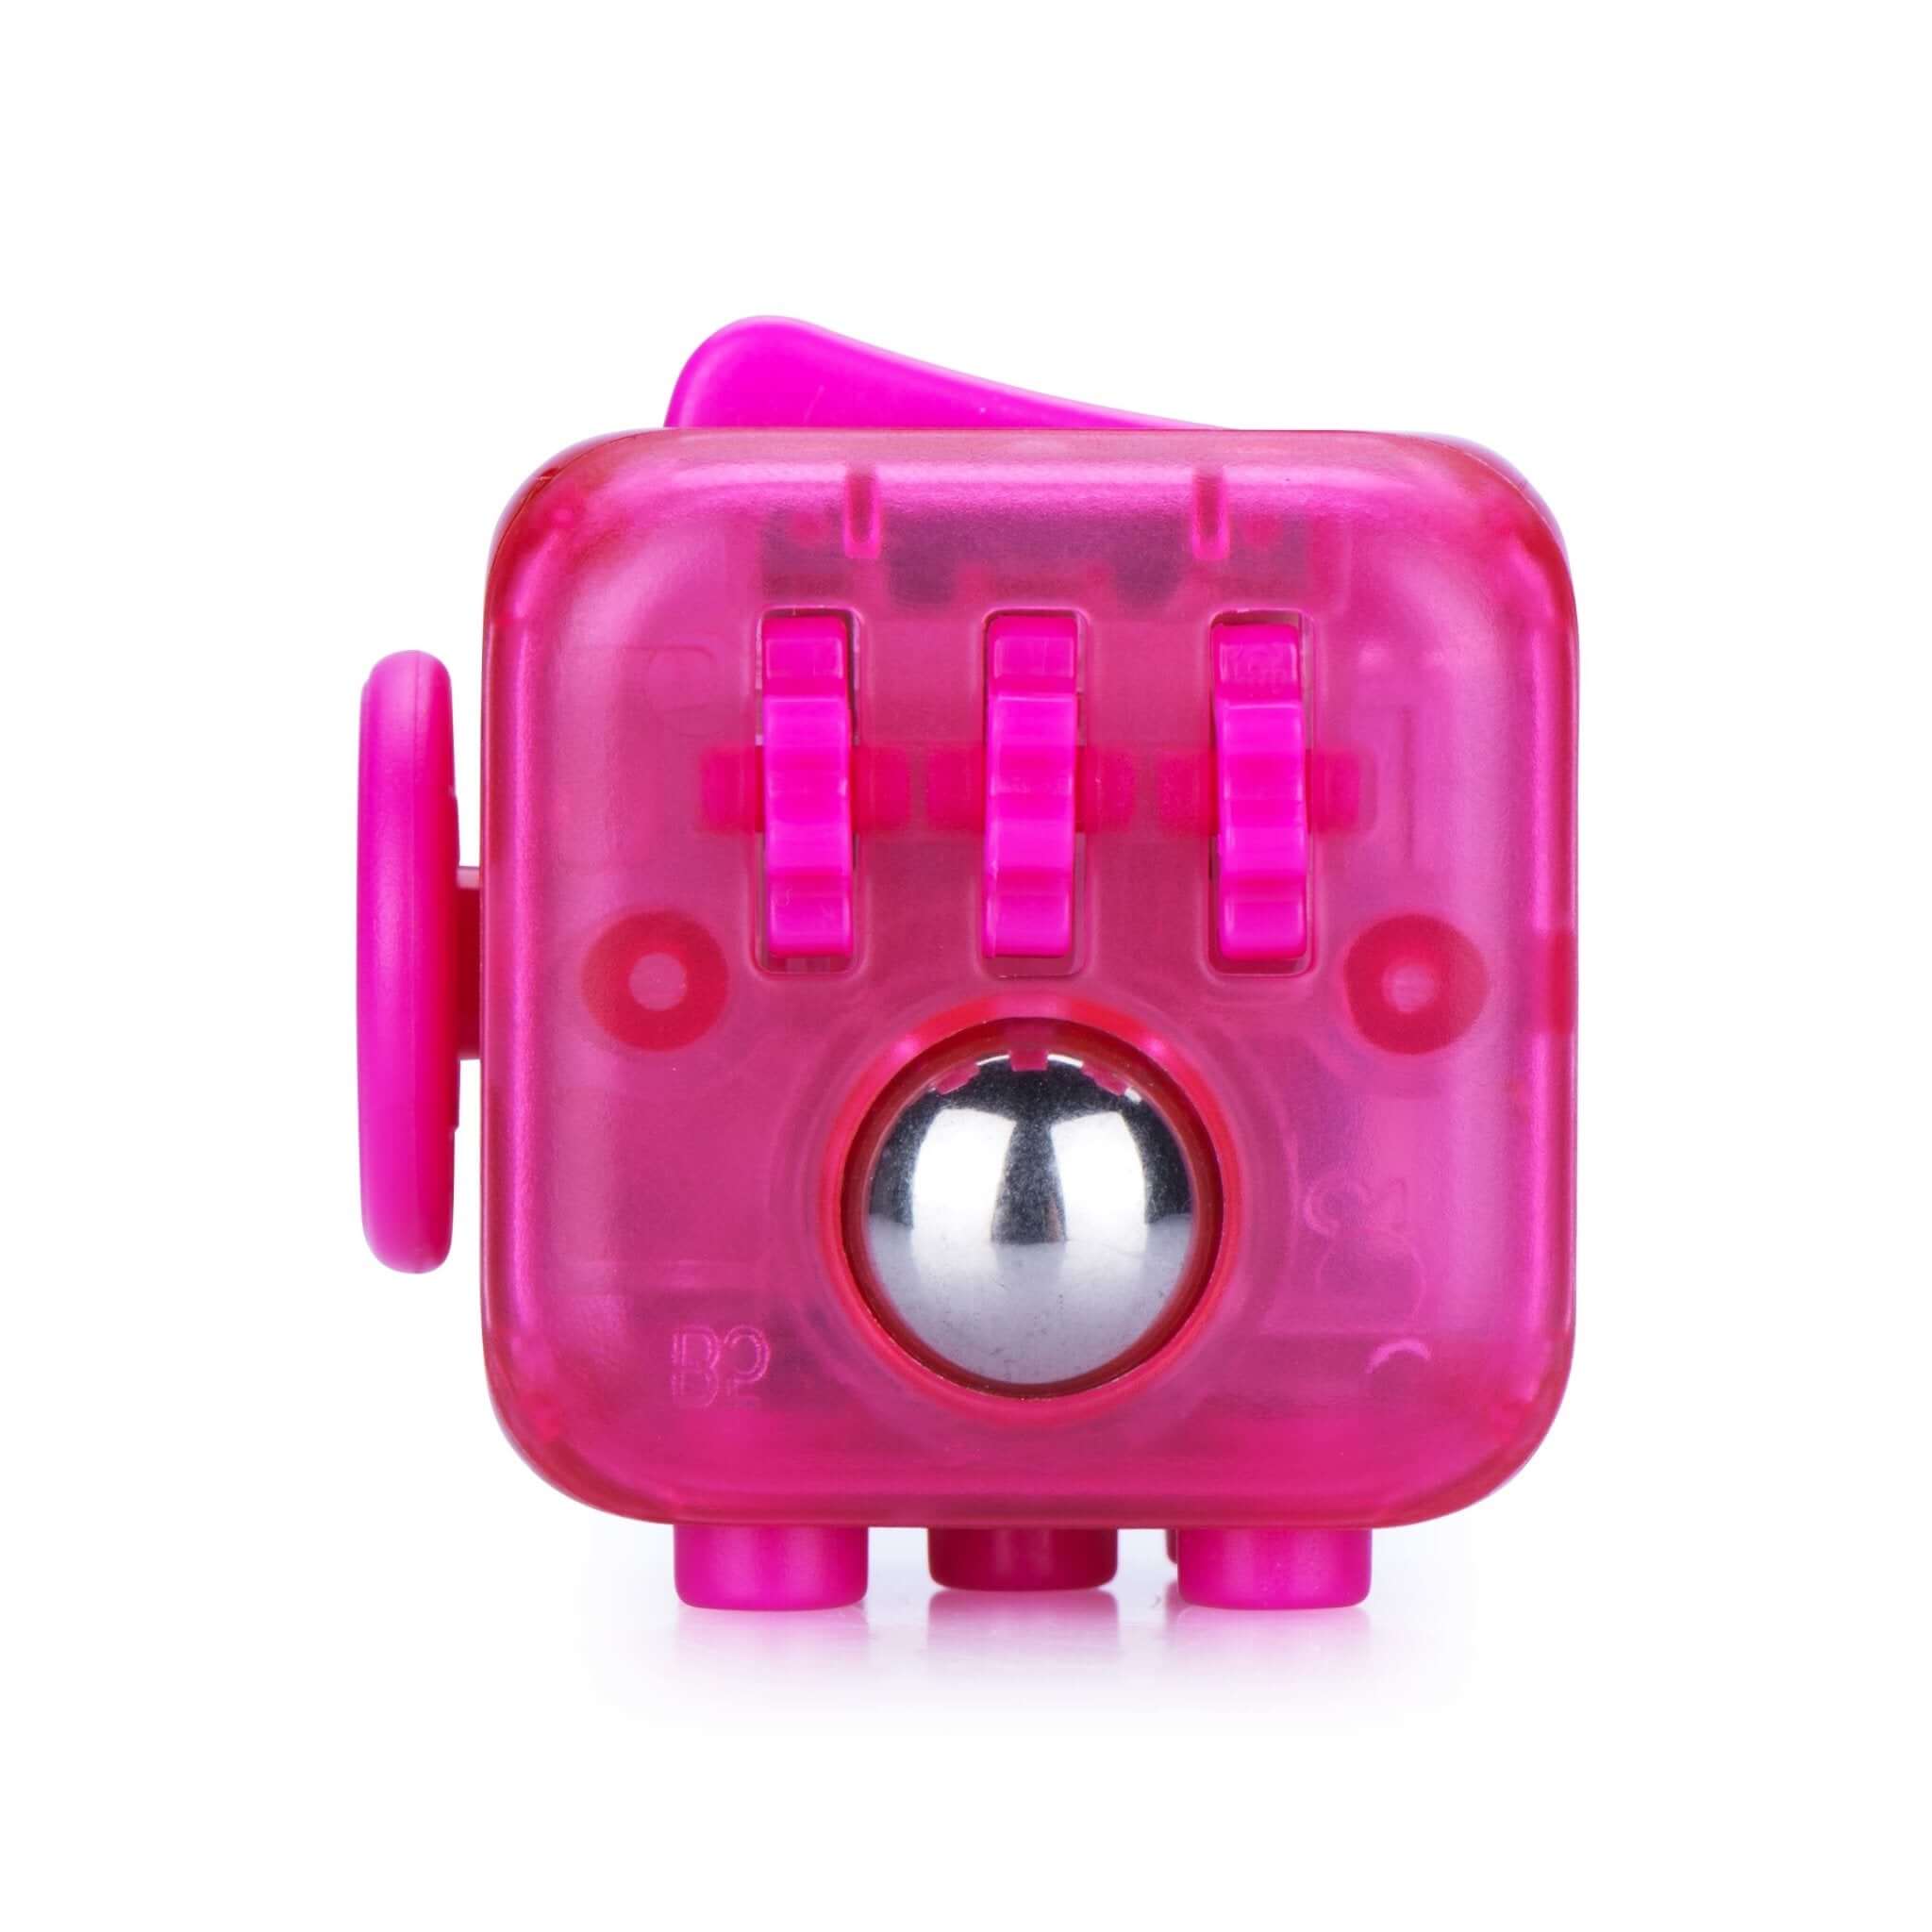 Fidget Cube (Limited Edition)